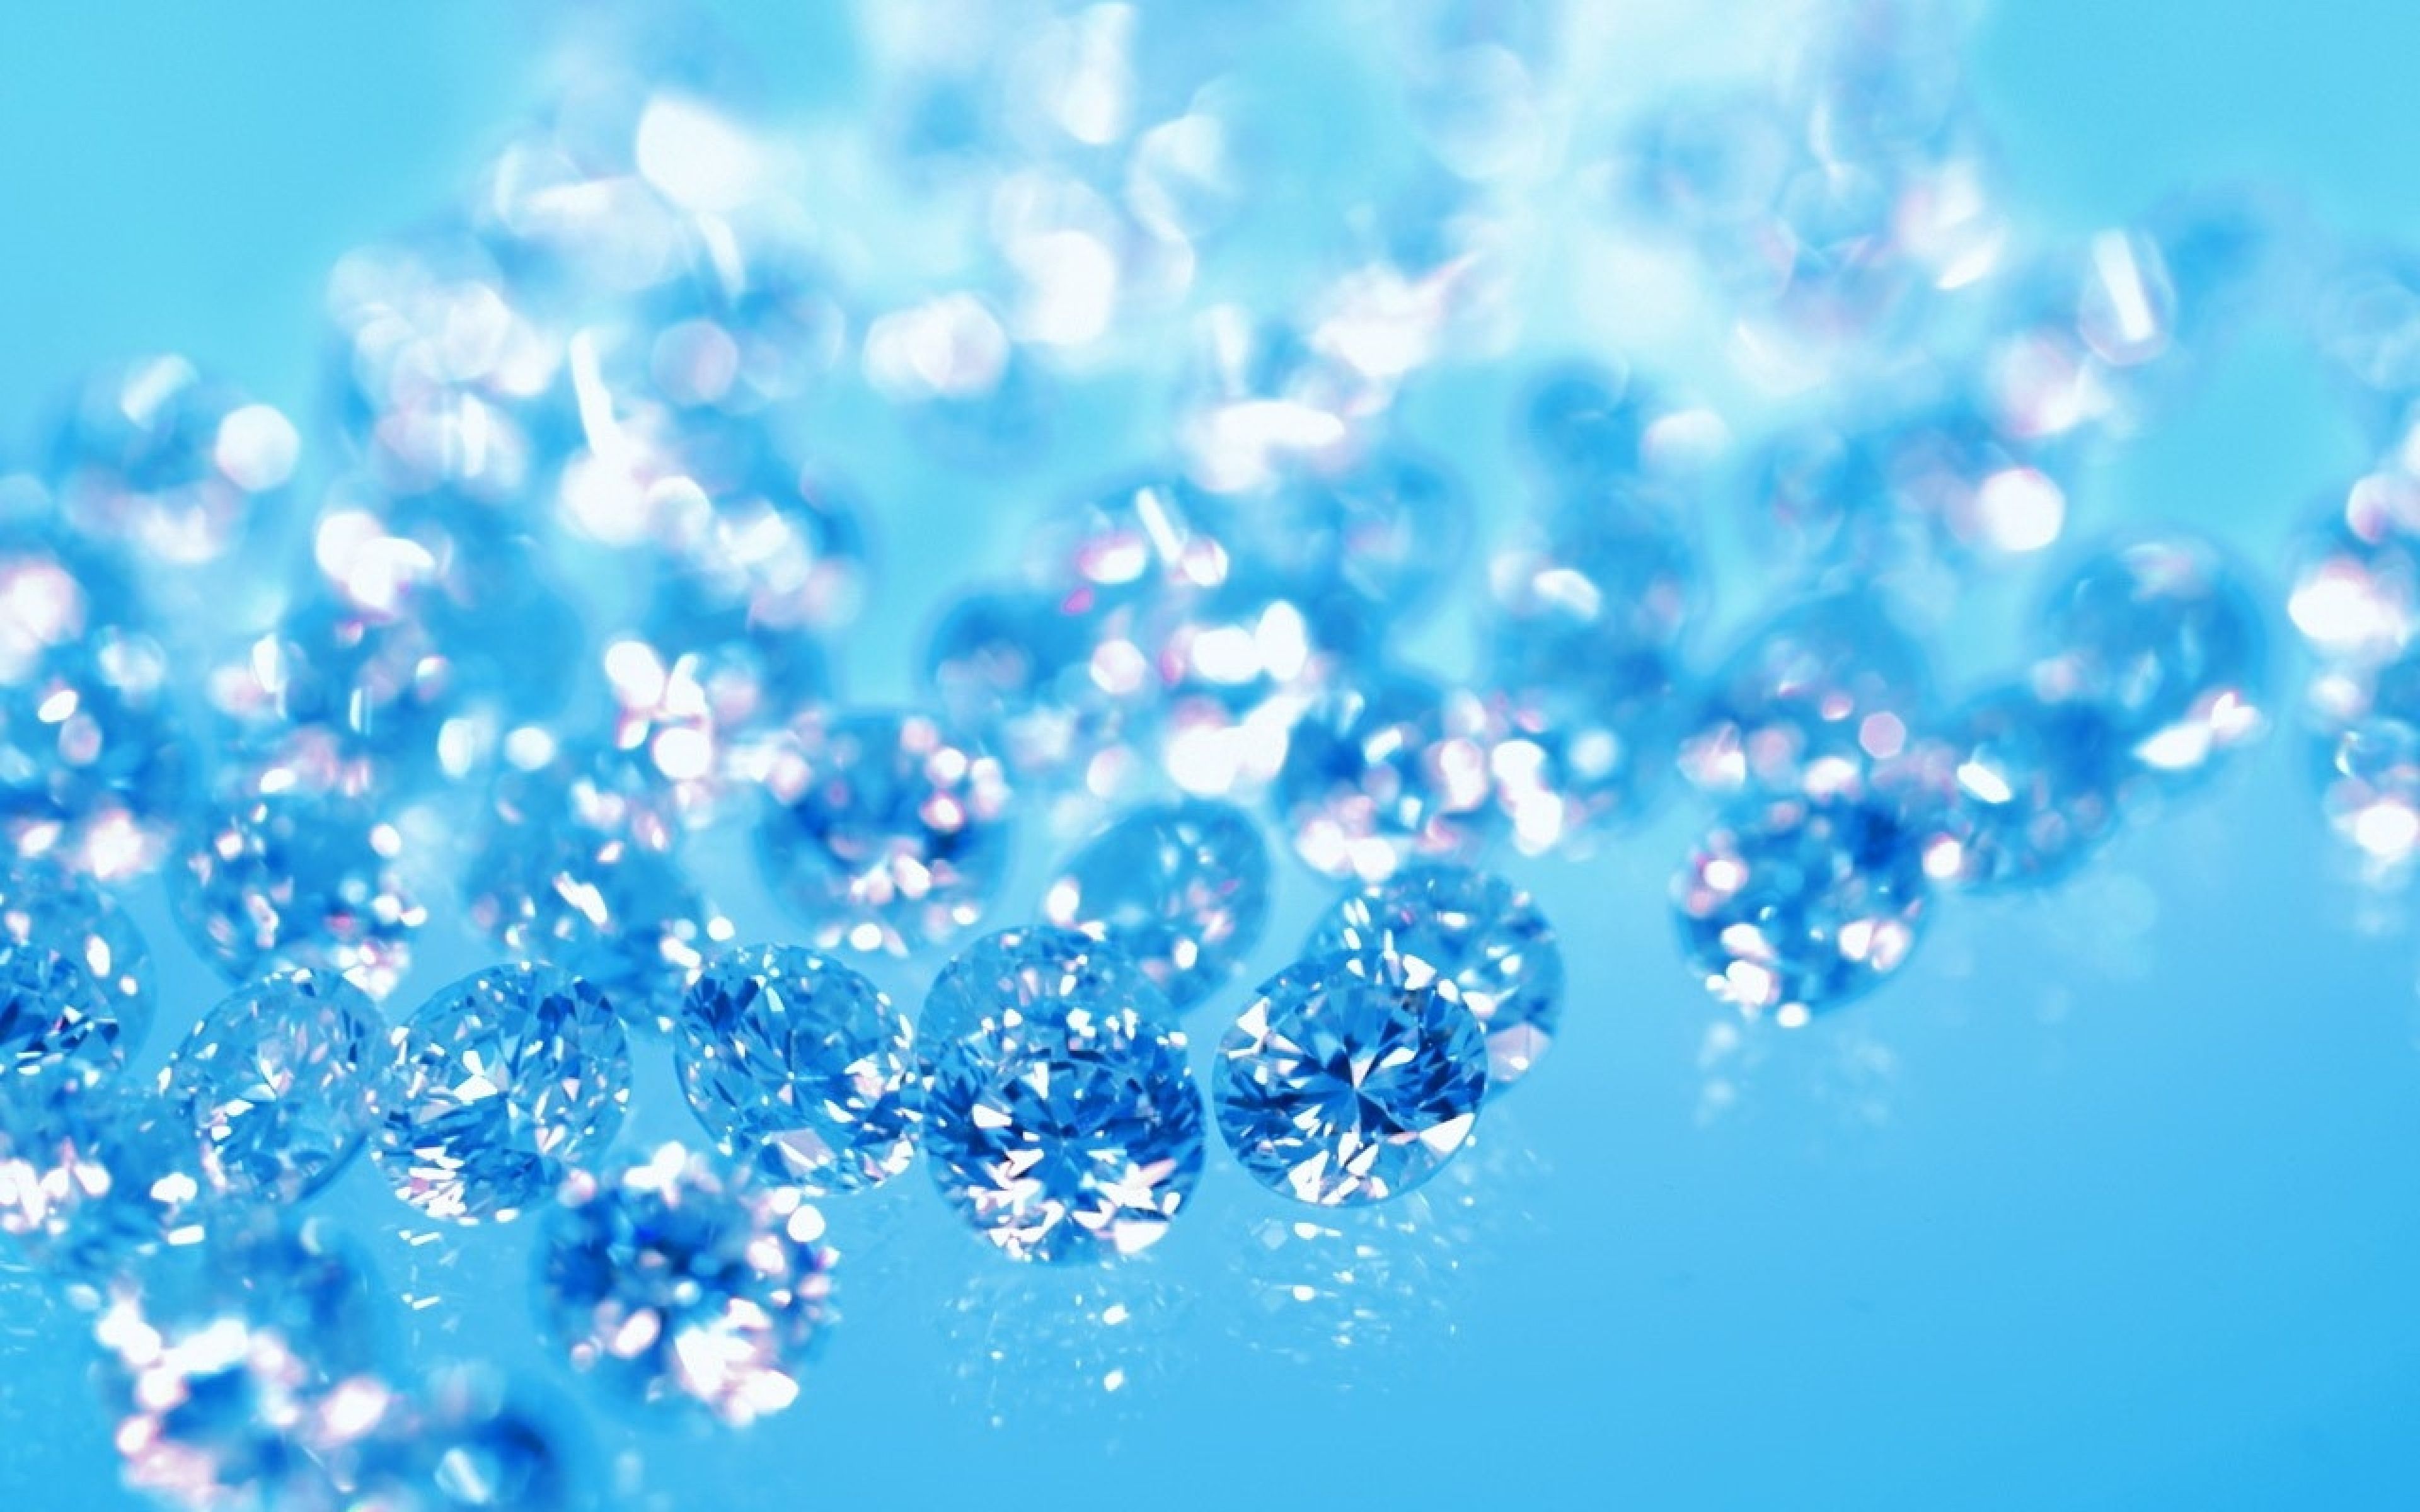 A close up of a pile of diamonds on a blue background - Diamond